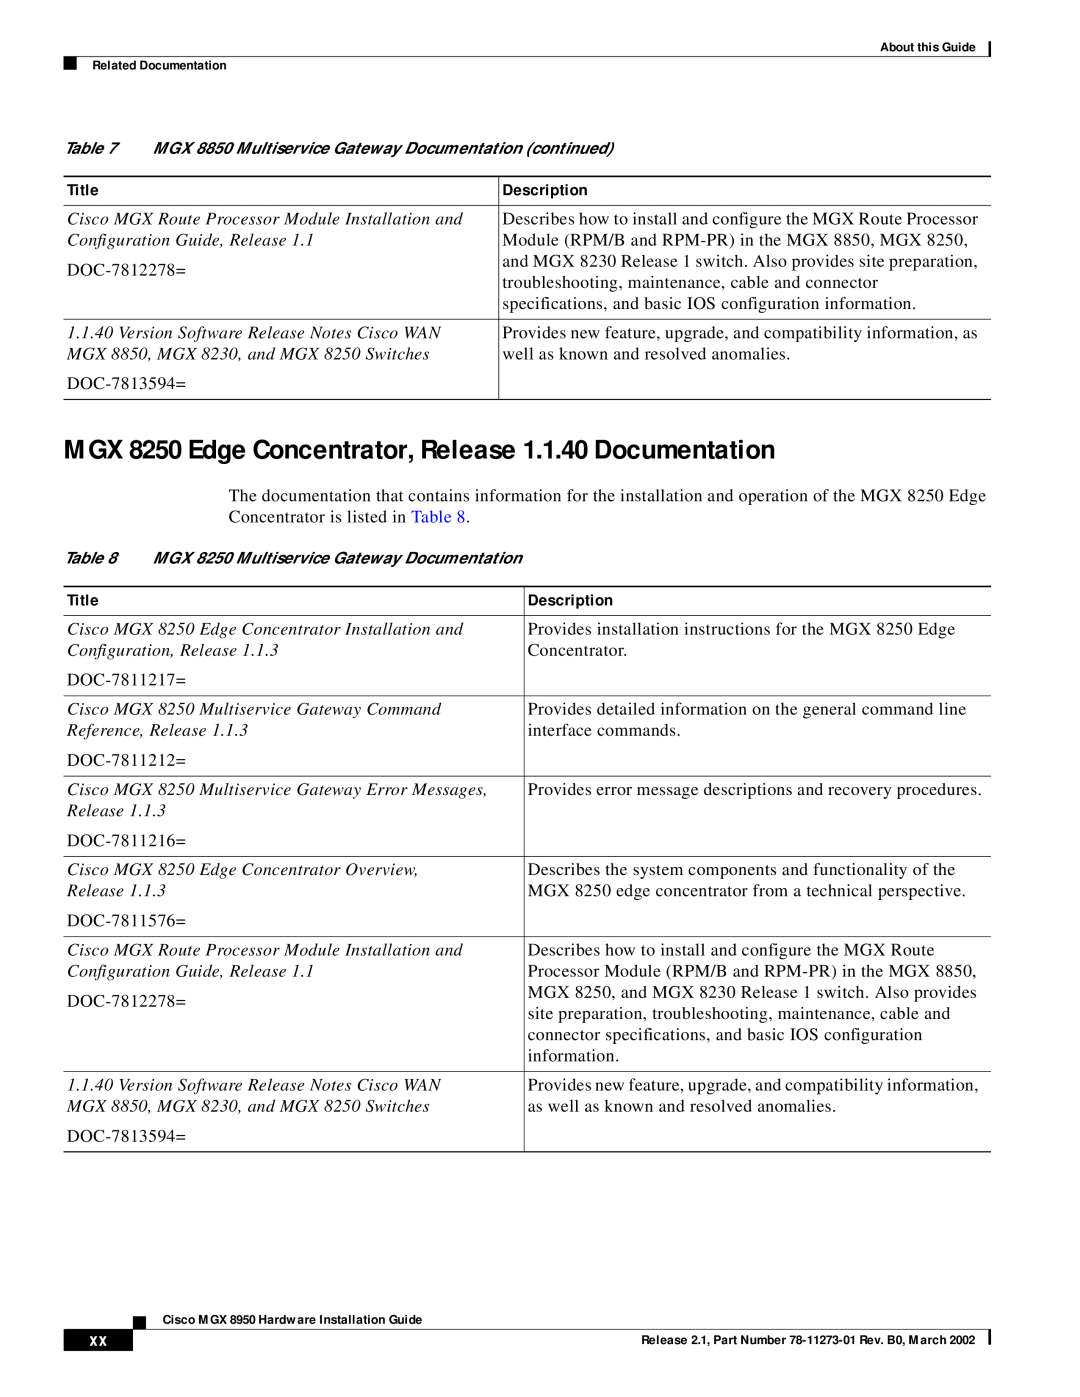 Cisco Systems MGX 8950 appendix MGX 8250 Edge Concentrator, Release 1.1.40 Documentation, Title, Description 